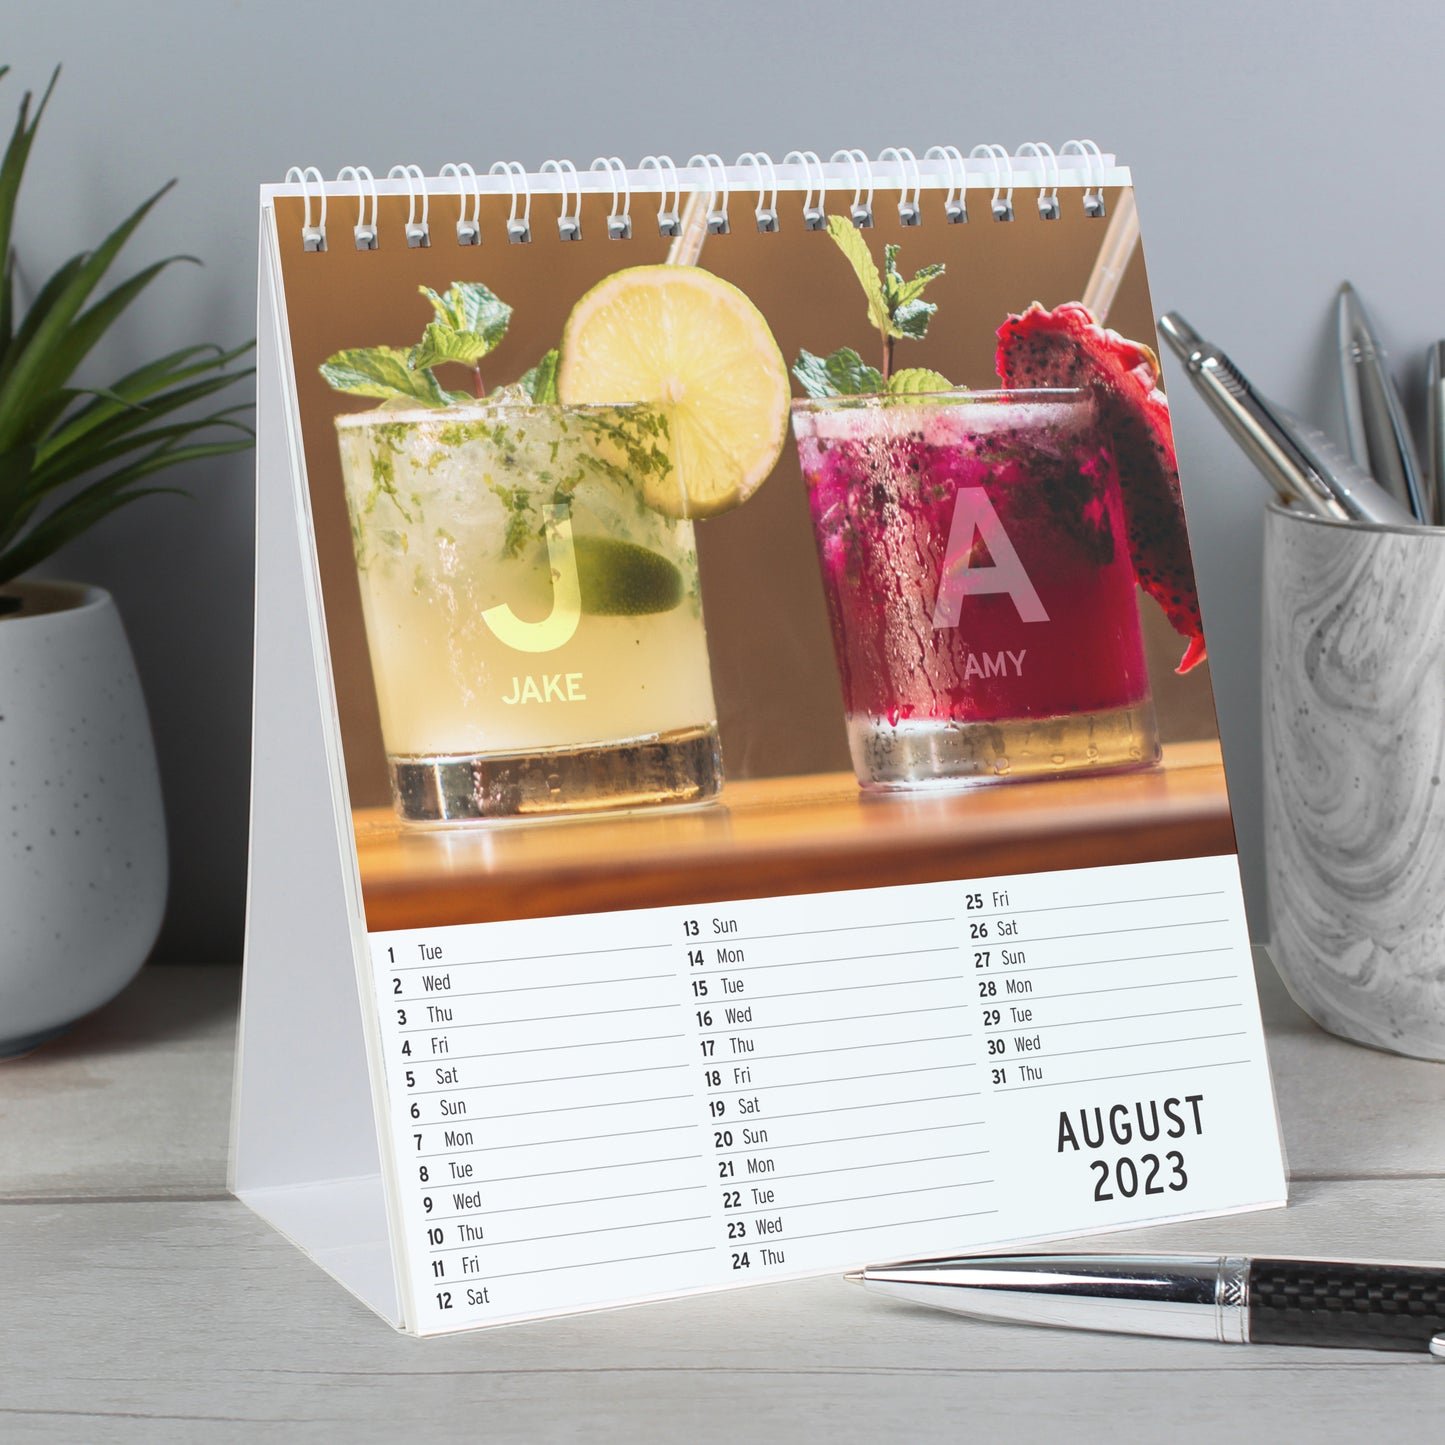 Personalised Couples Desk Calendar - Personalise It!